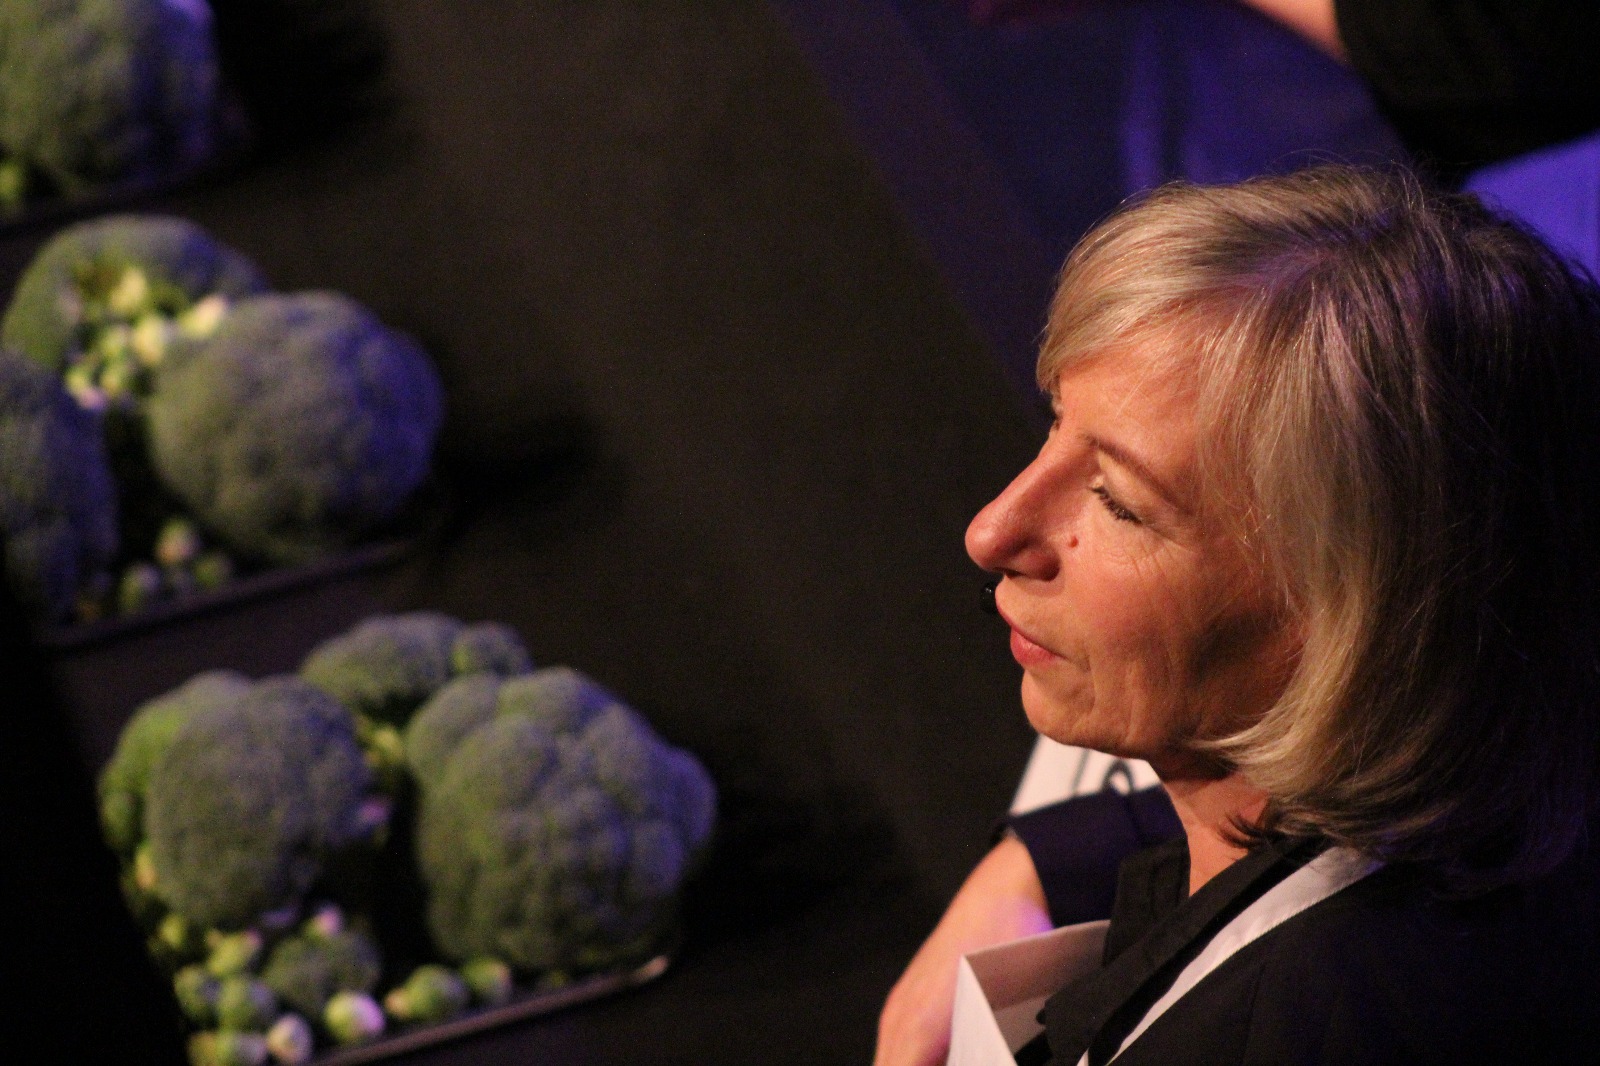 Linda Spaanbroek naast toonbank met broccoli en spruitjes